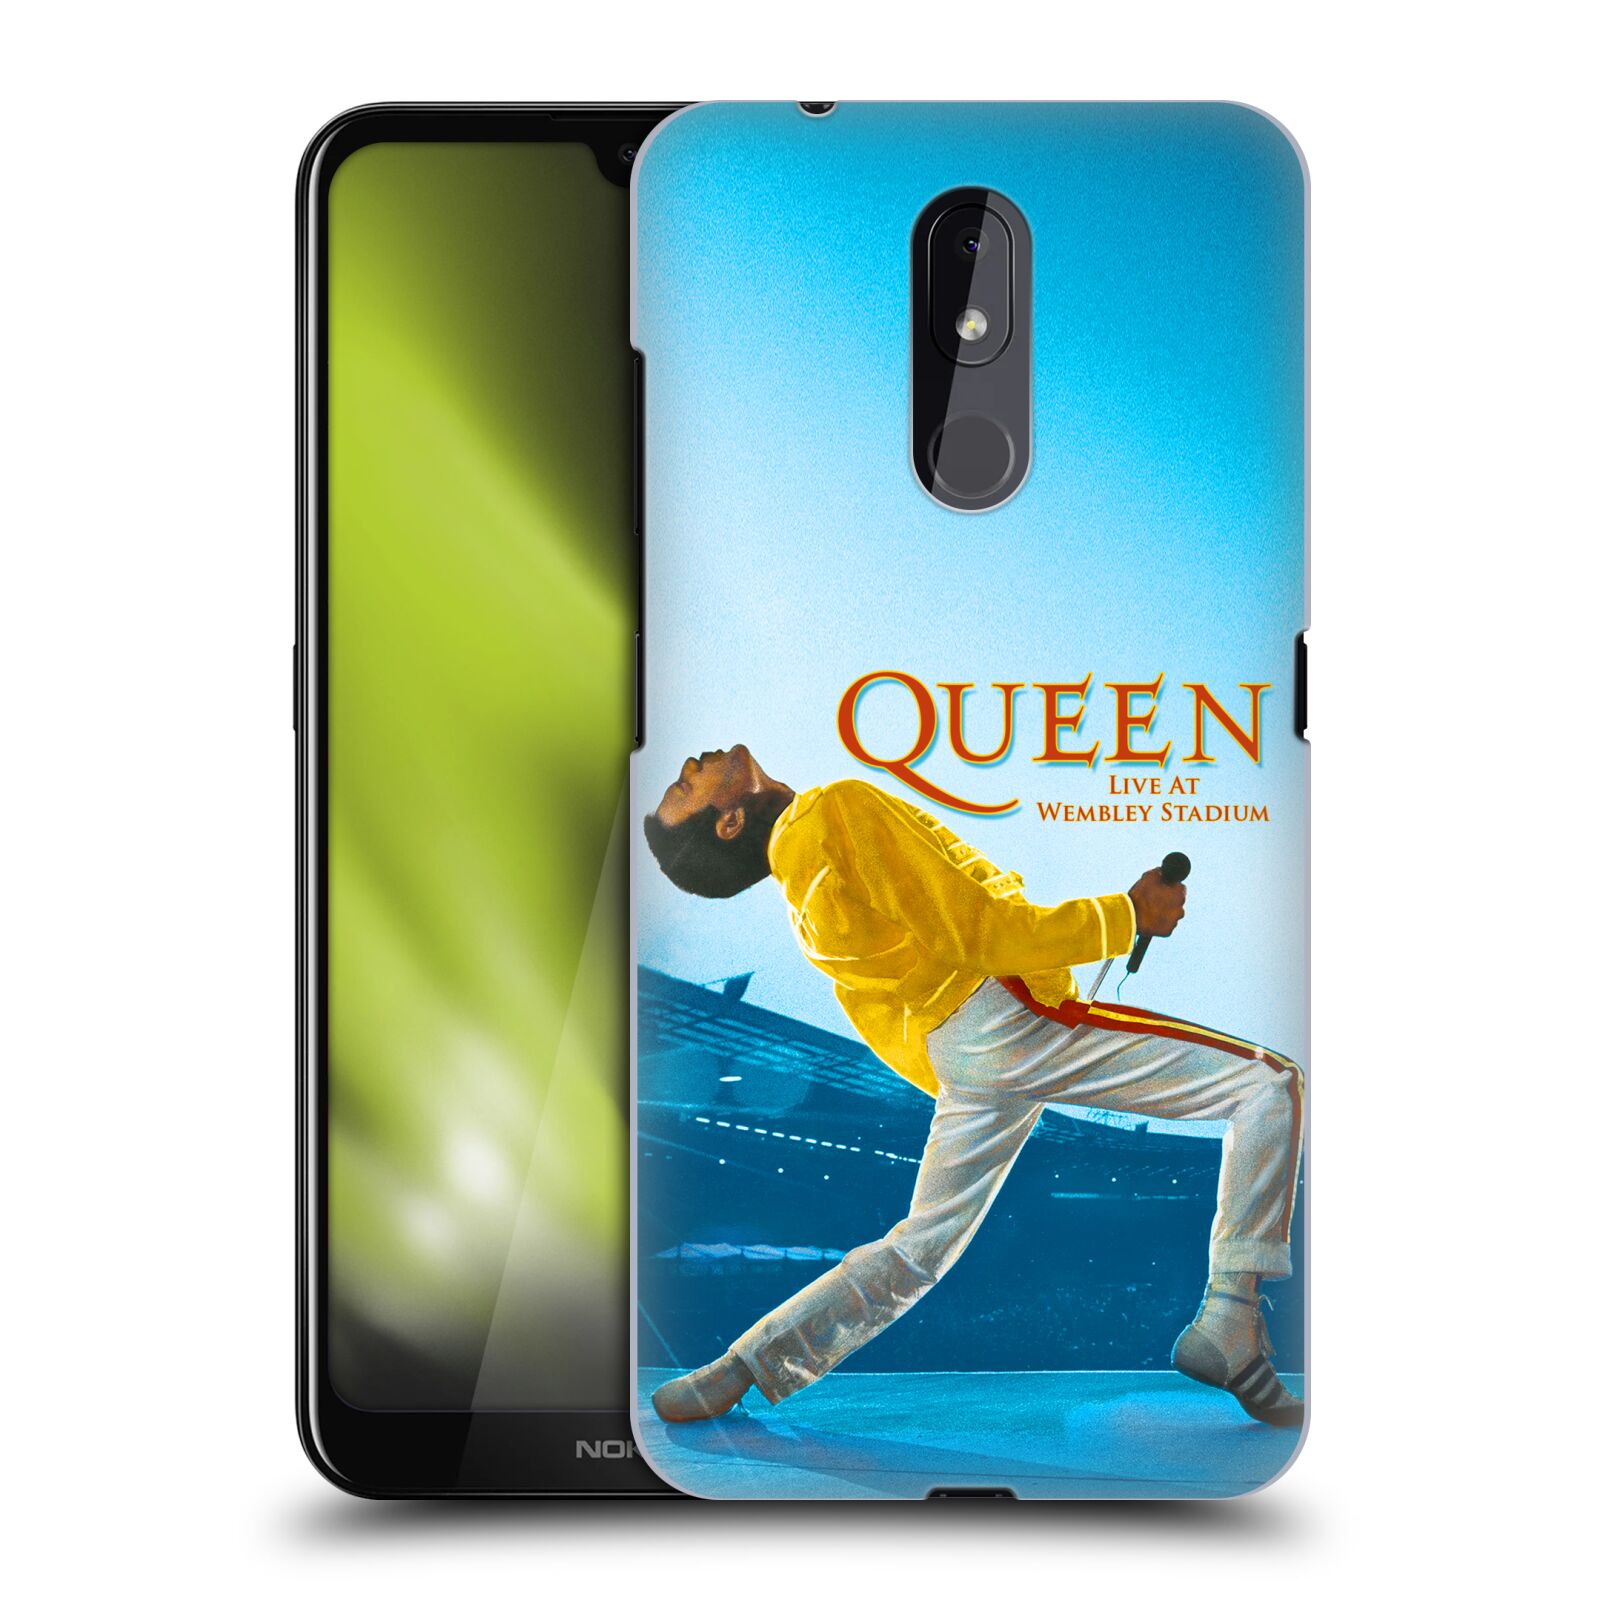 Pouzdro na mobil Nokia 3.2 - HEAD CASE - zpěvák Queen skupina Freddie Mercury